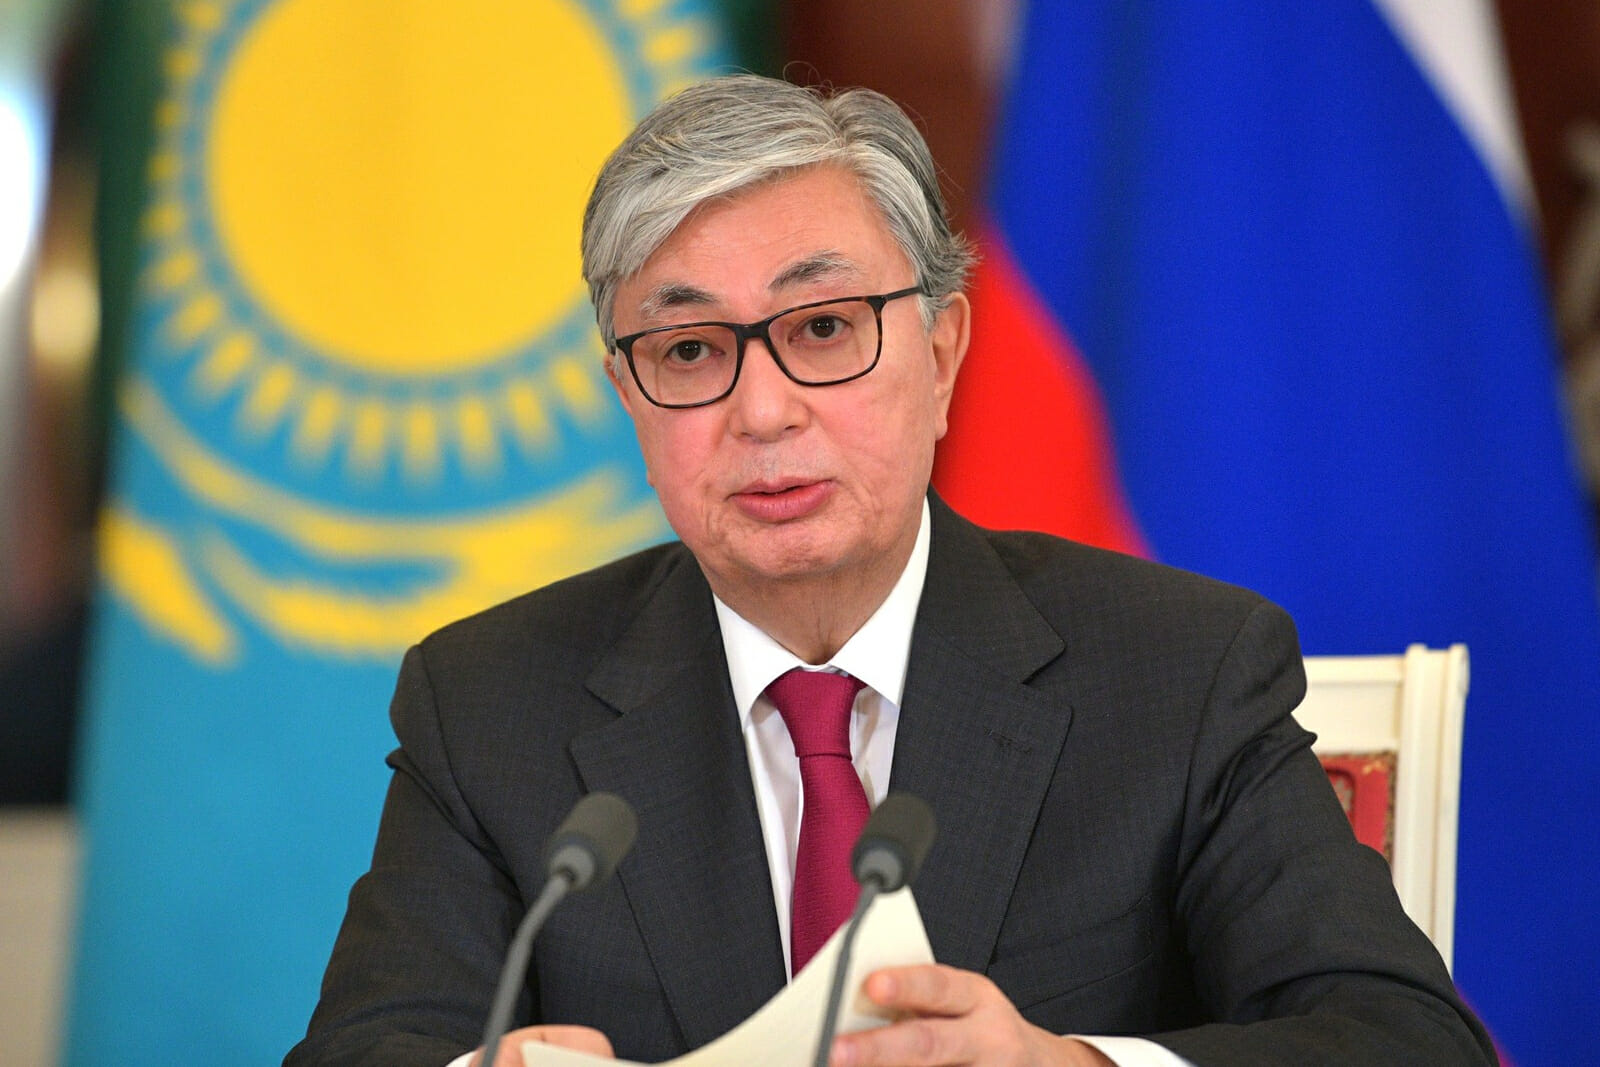 On Human Rights in Kazakhstan